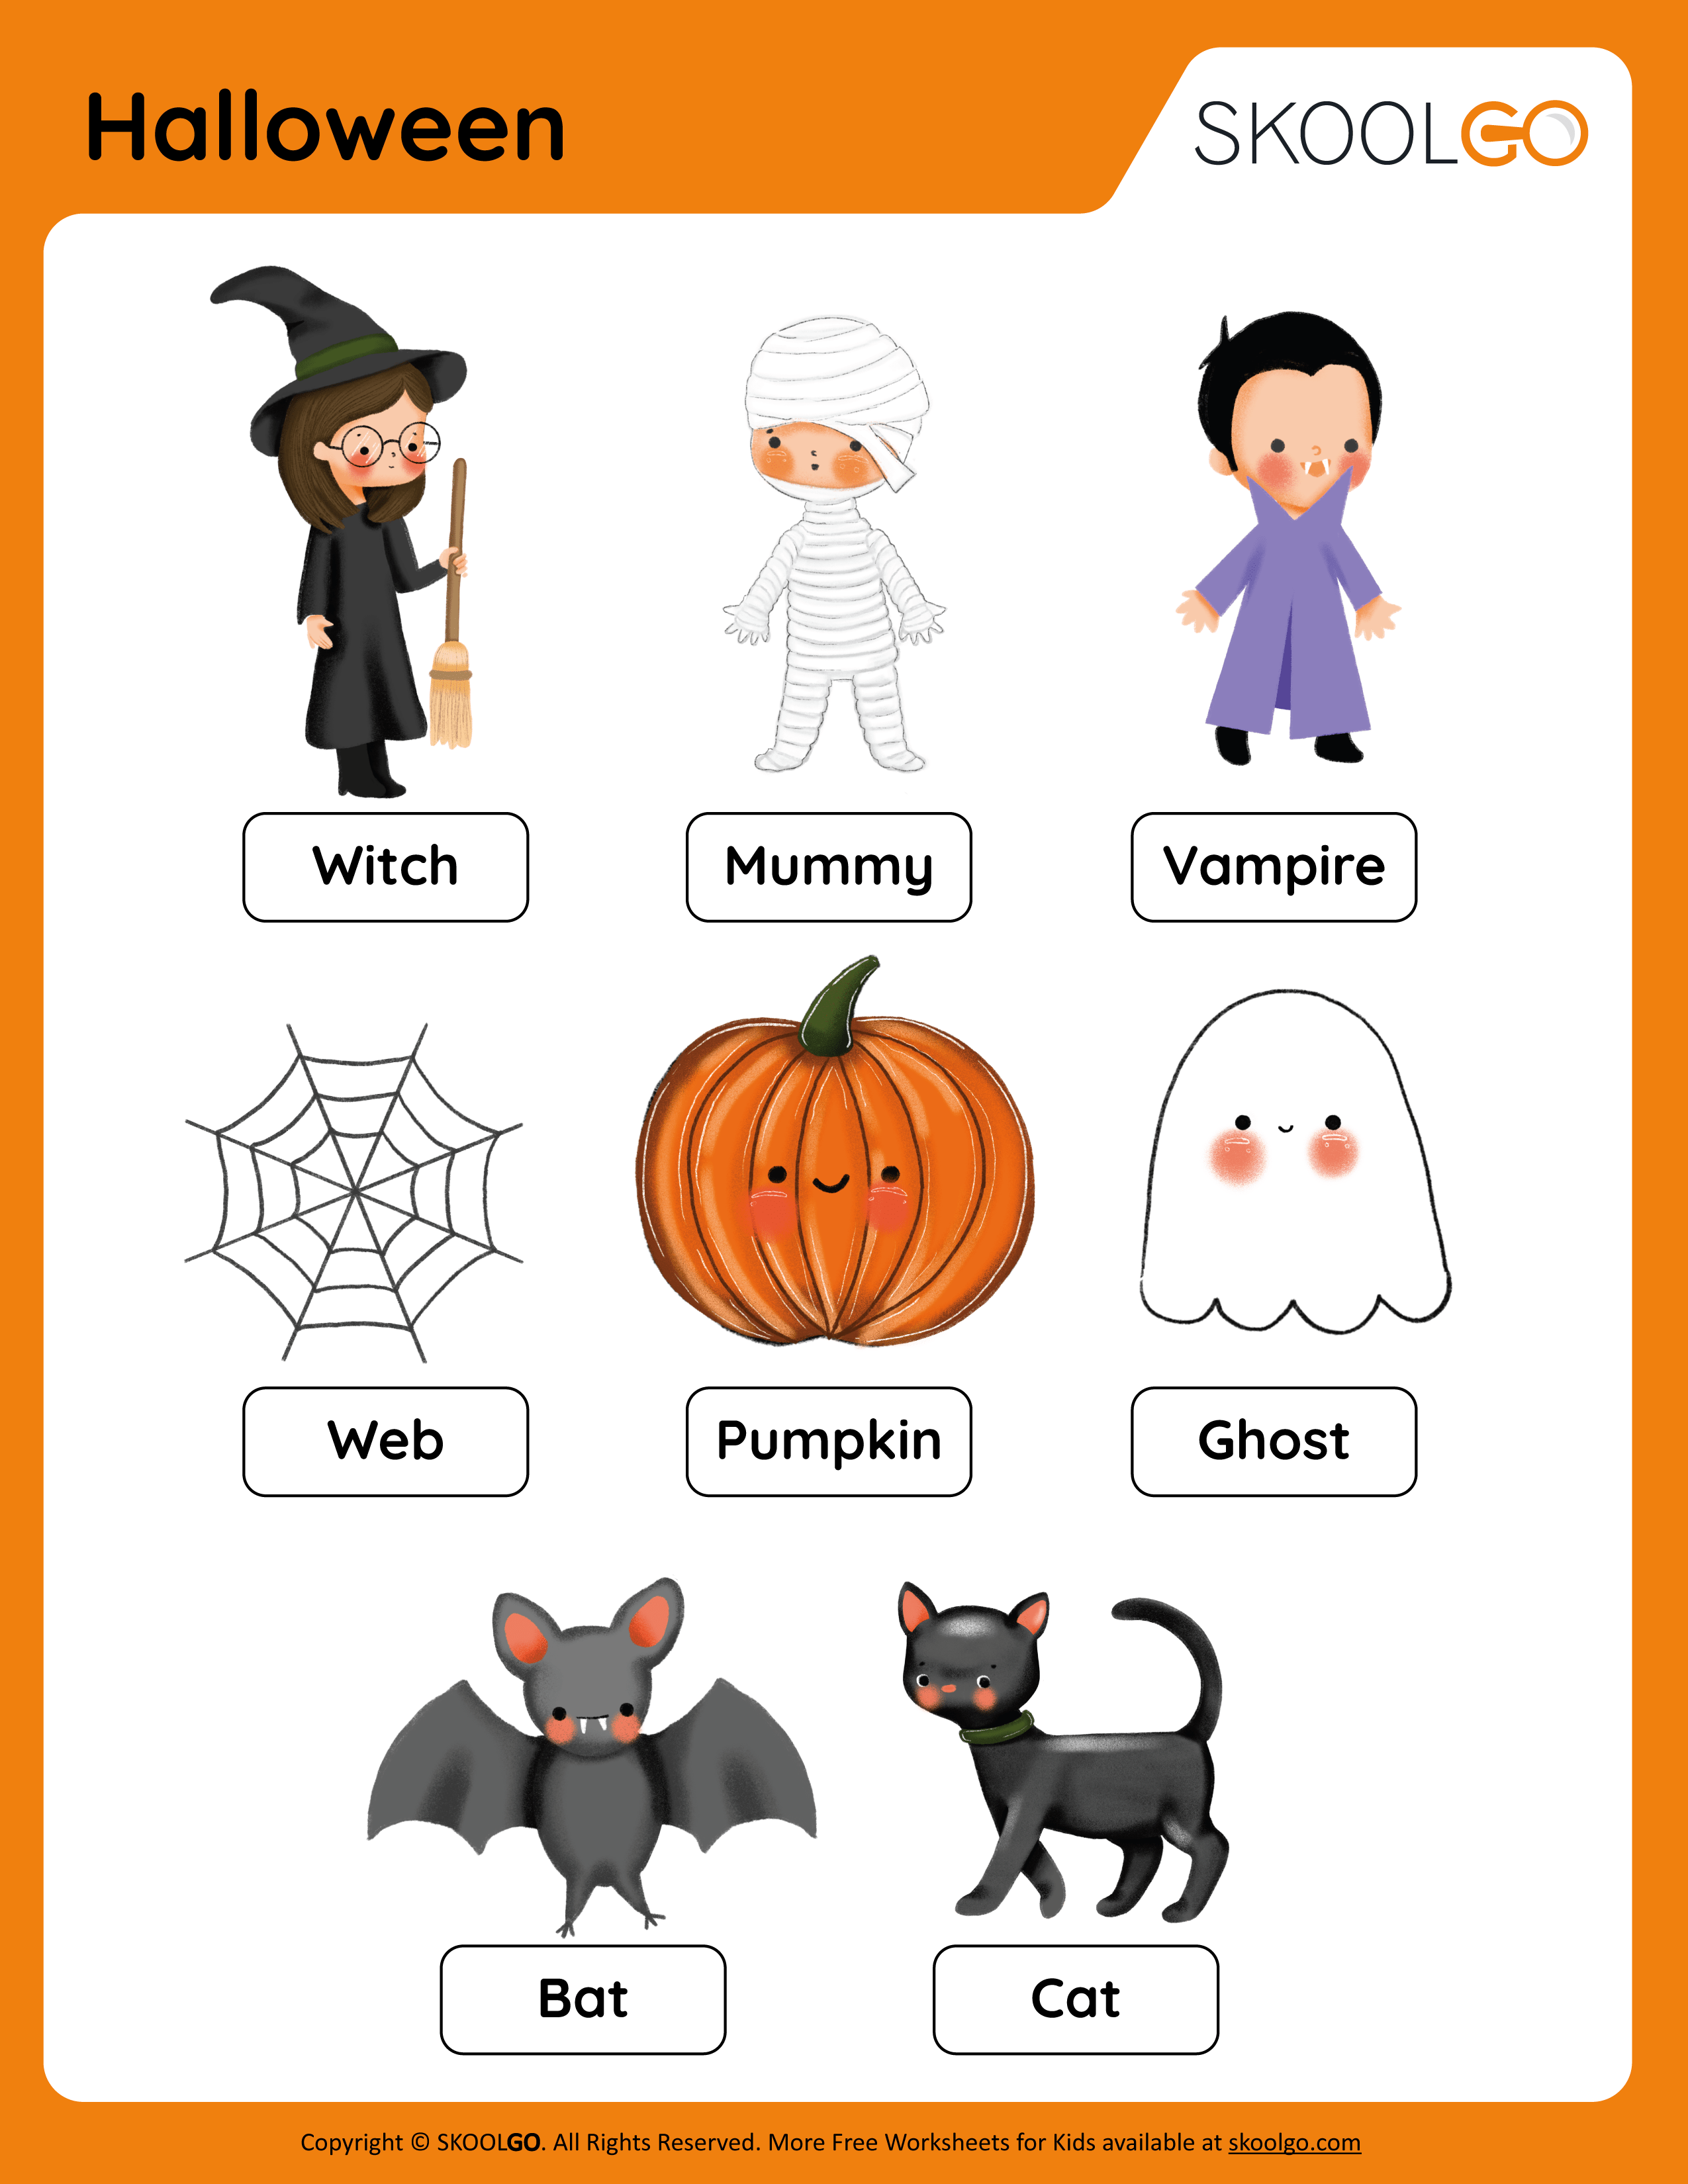 Halloween - Free Worksheet for Kids